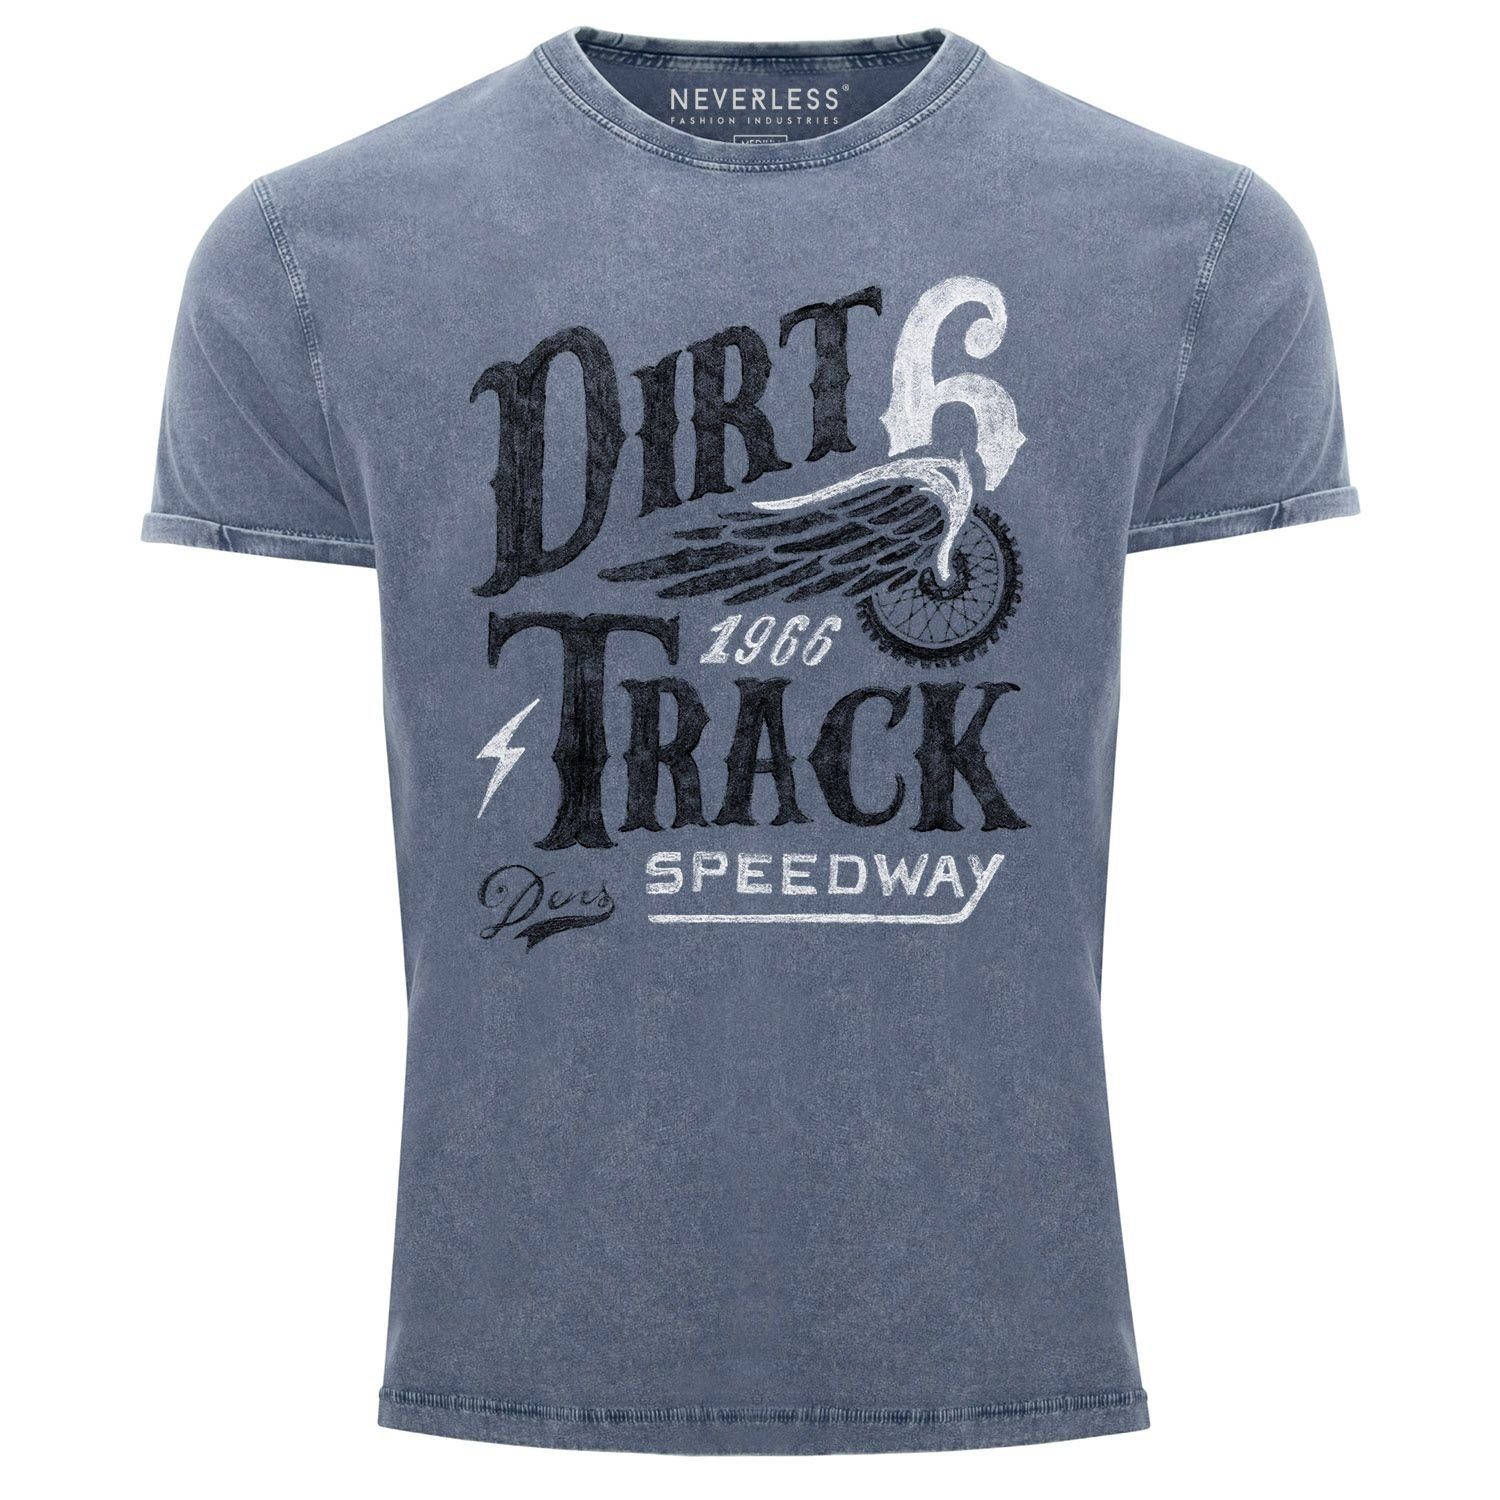 Neverless Print-Shirt Cooles Angesagtes Herren T-Shirt Vintage Shirt Dirt Track Racing Aufdruck Used Look Slim Fit Neverless® mit Print blau